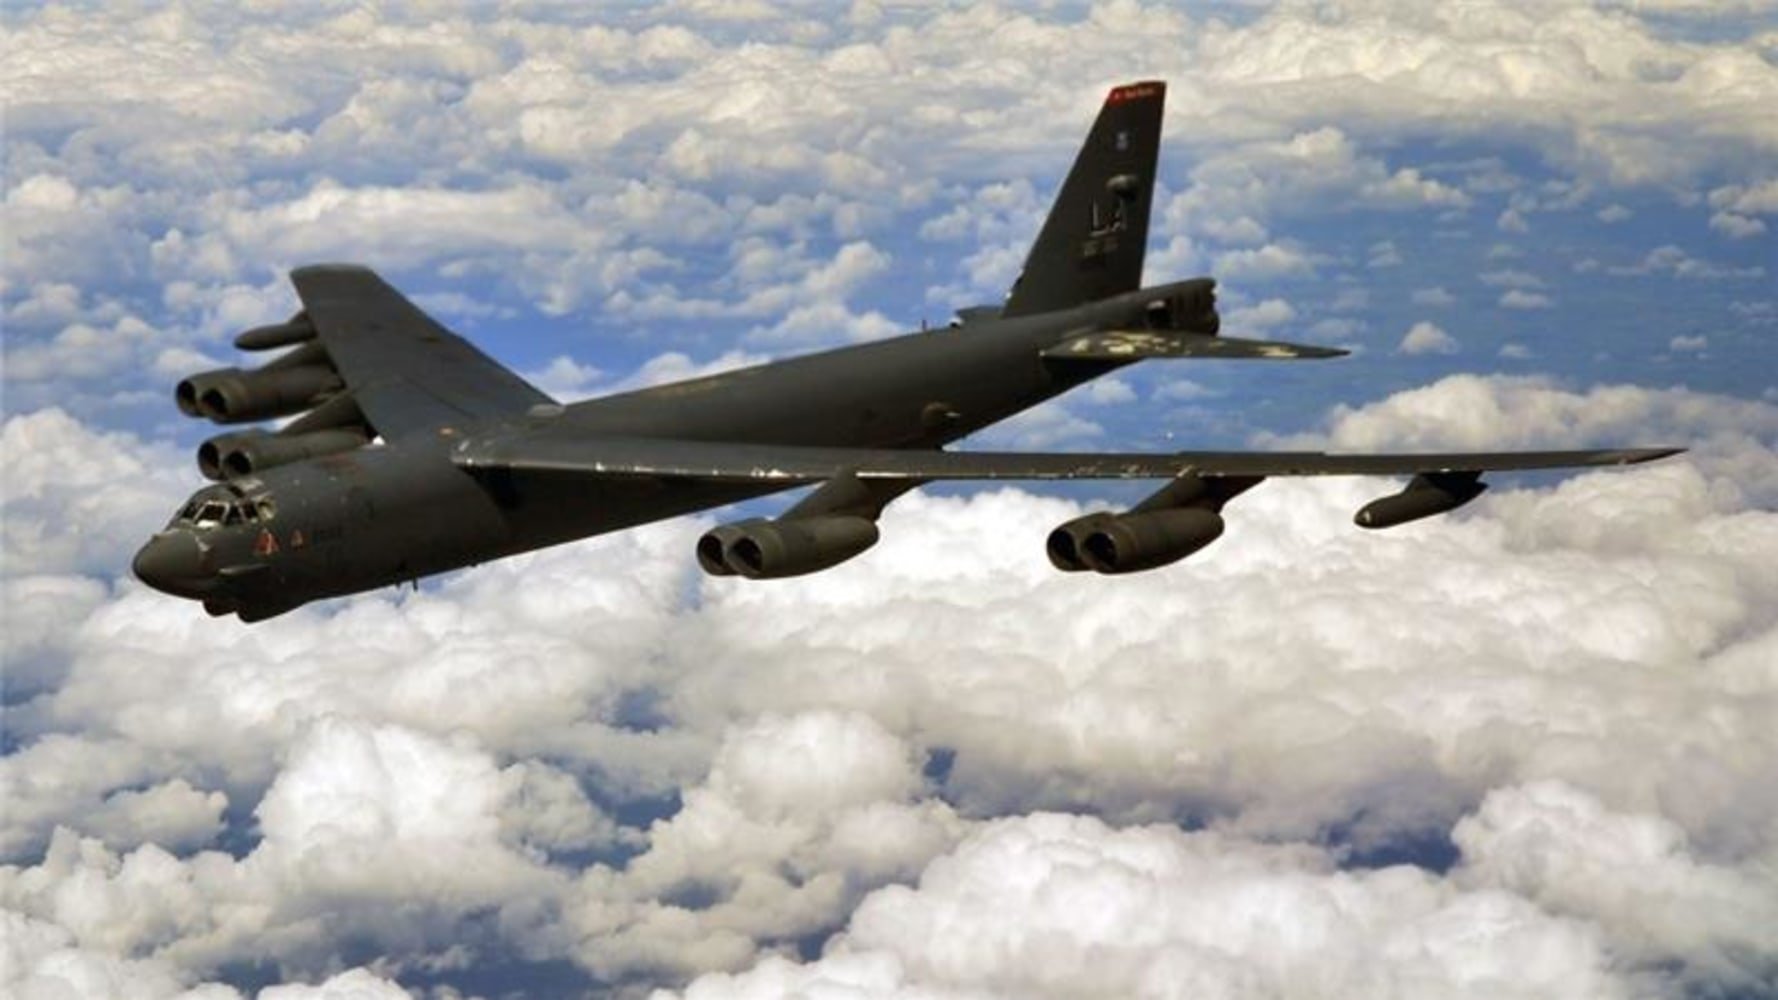 Картинка бомбардировщика. B-52h ВВС США. США B-52h Stratofortress. В-52н ВВС США бомбардировщик. B-52 ВВС США.